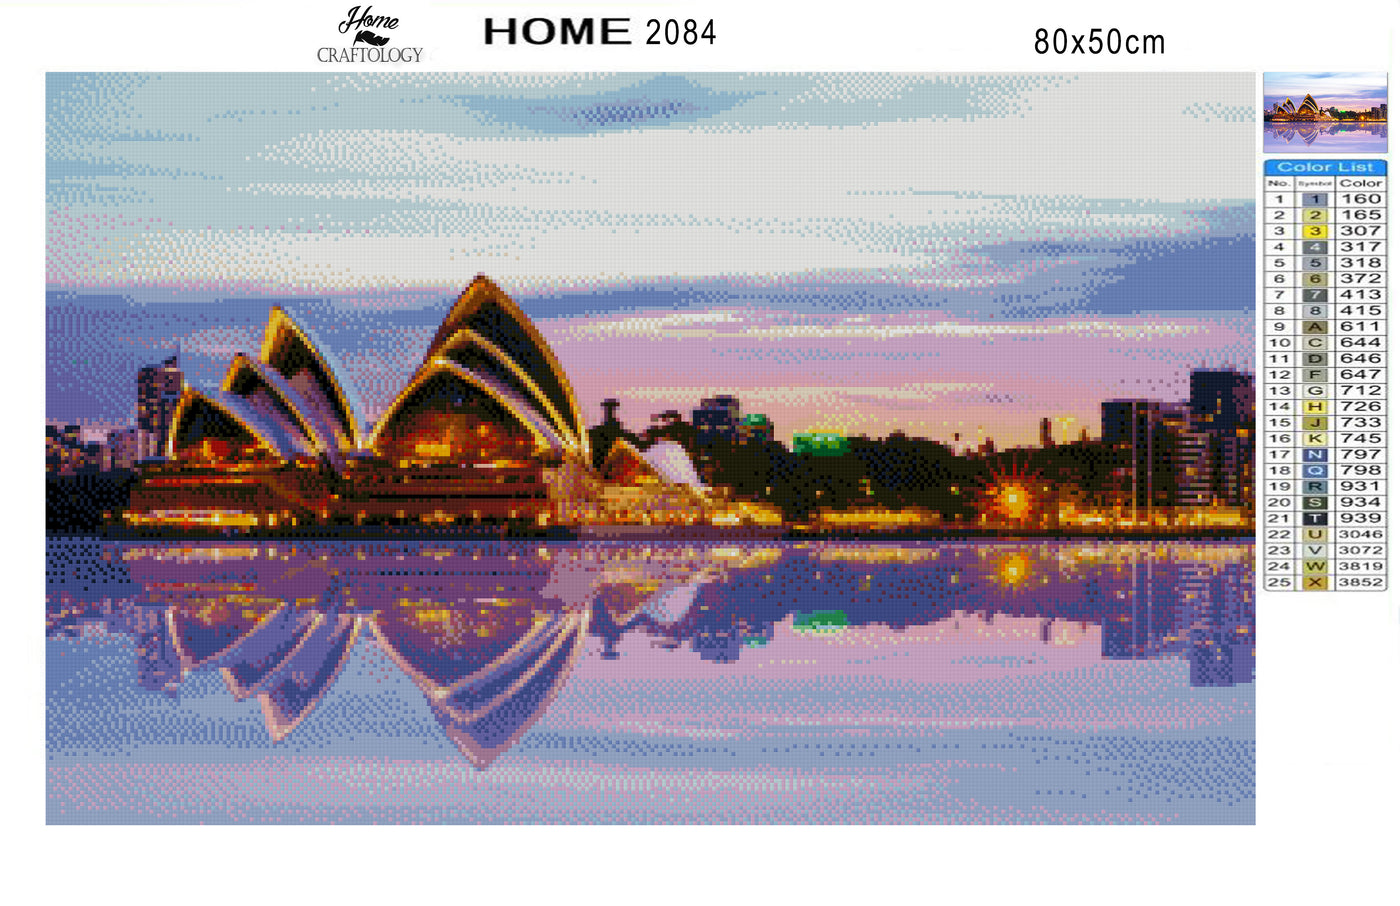 Sydney Opera House Night Lights - Premium Diamond Painting Kit